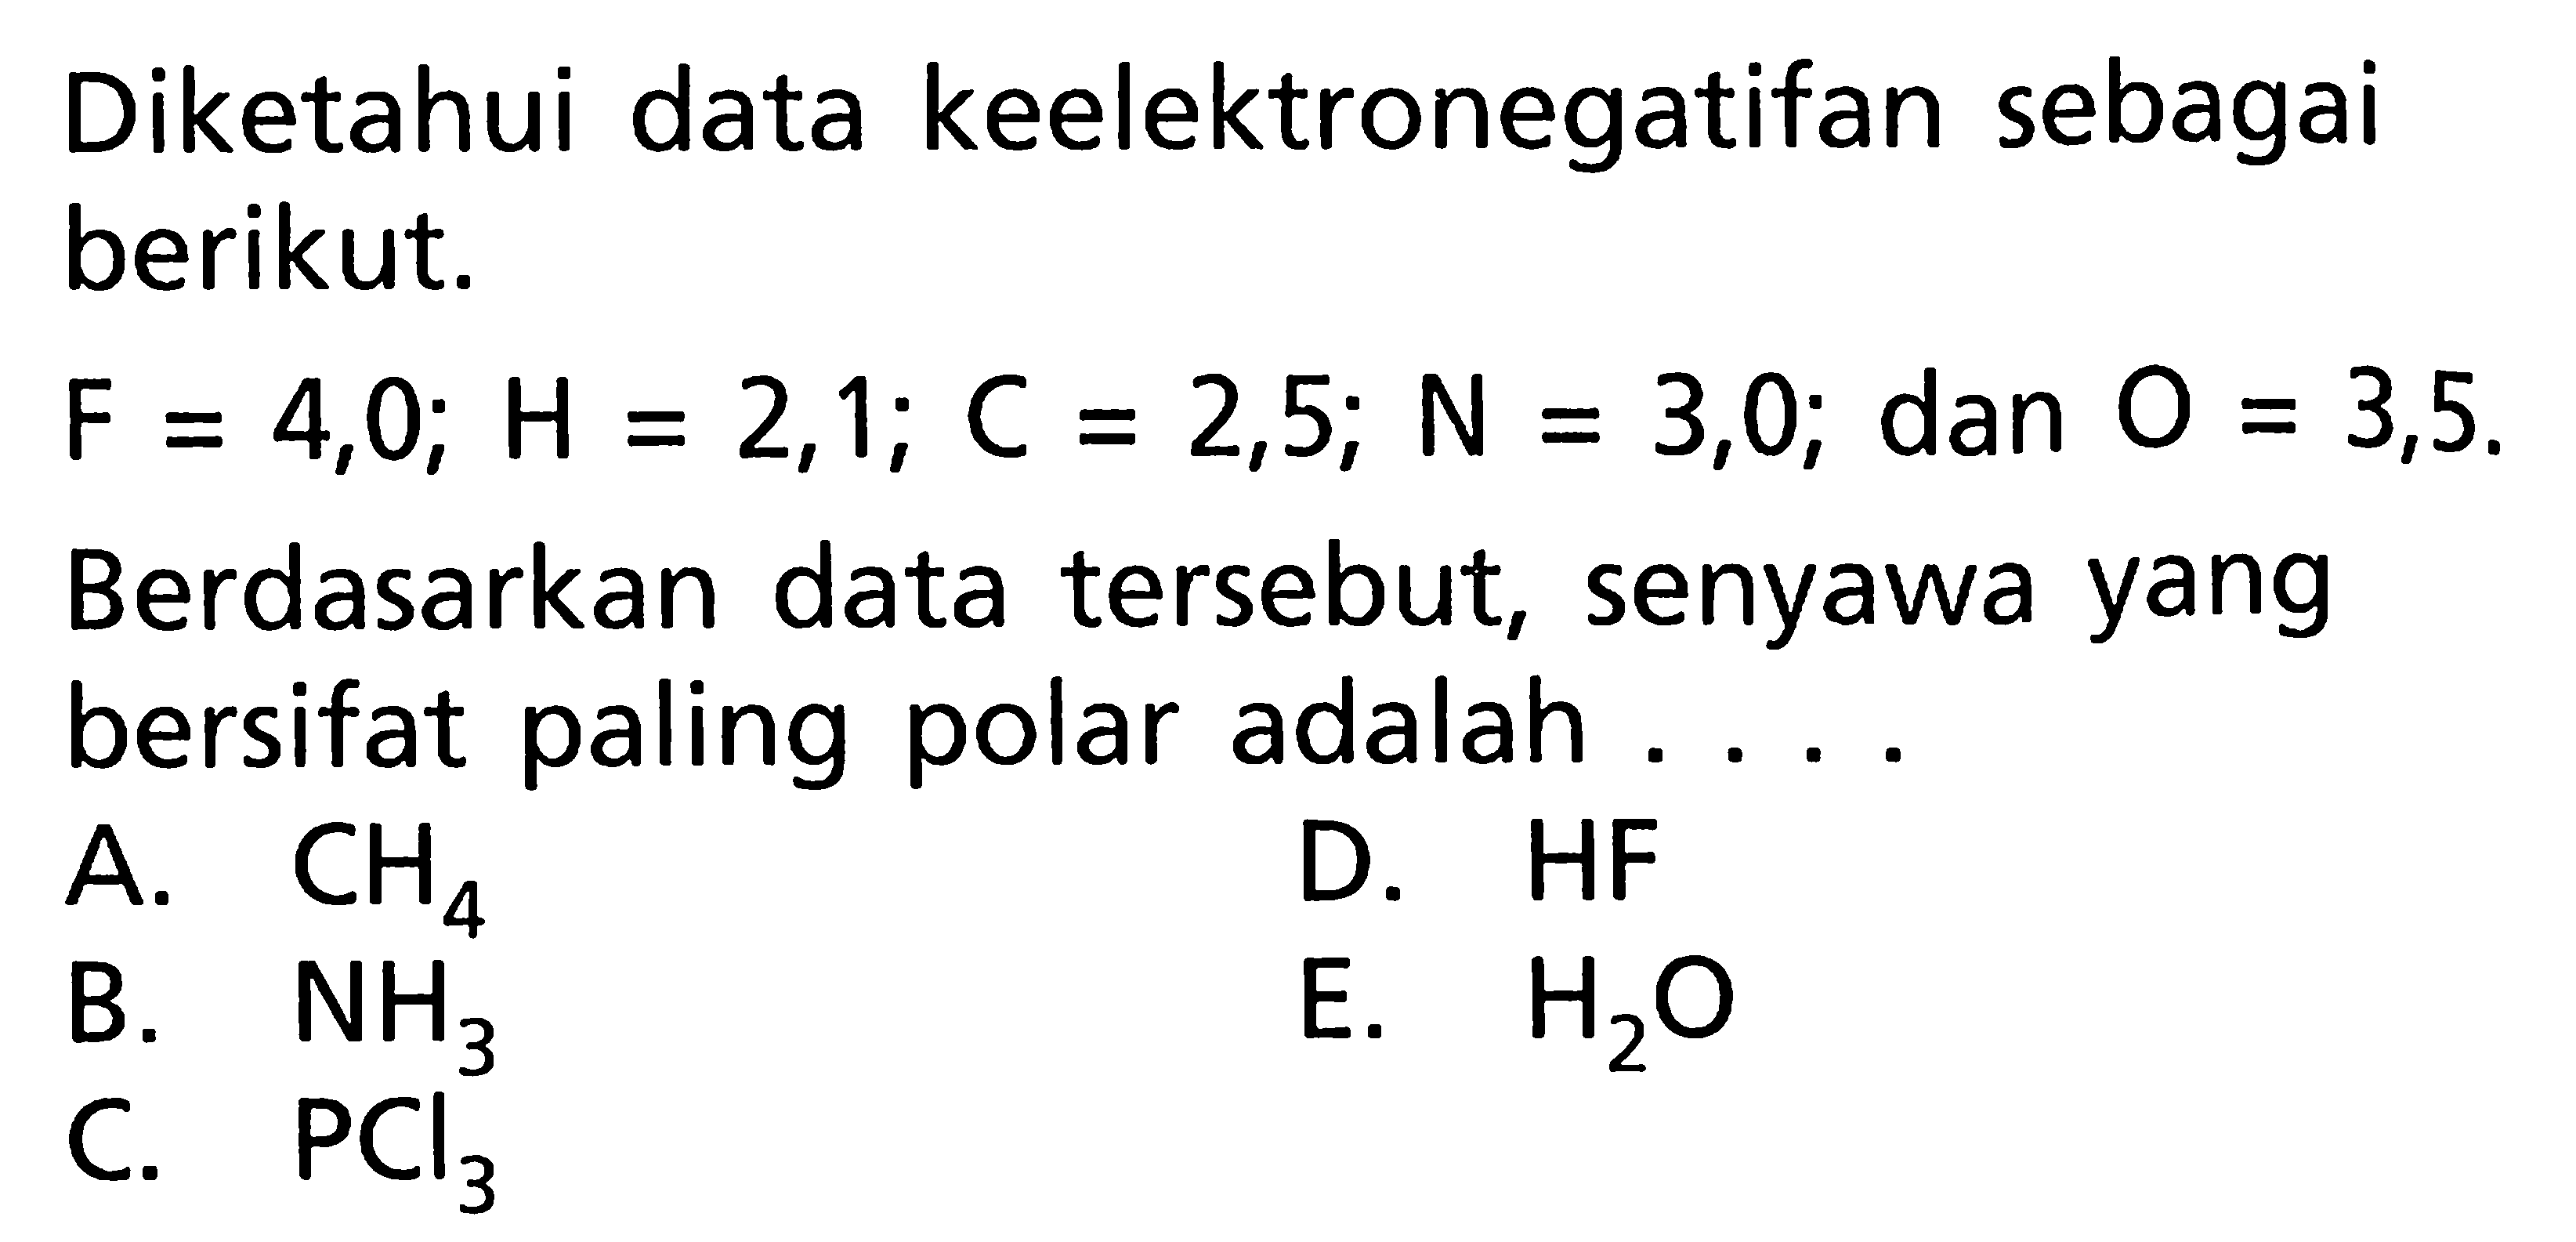 Diketahui data keelektronegatifan sebagai berikut. F = 4,0; H = 2,1; C = 2,5; N = 3,0; dan 0 = 3,5. Berdasarkan data tersebut, senyawa yang bersifat paling polar adalah . . . .